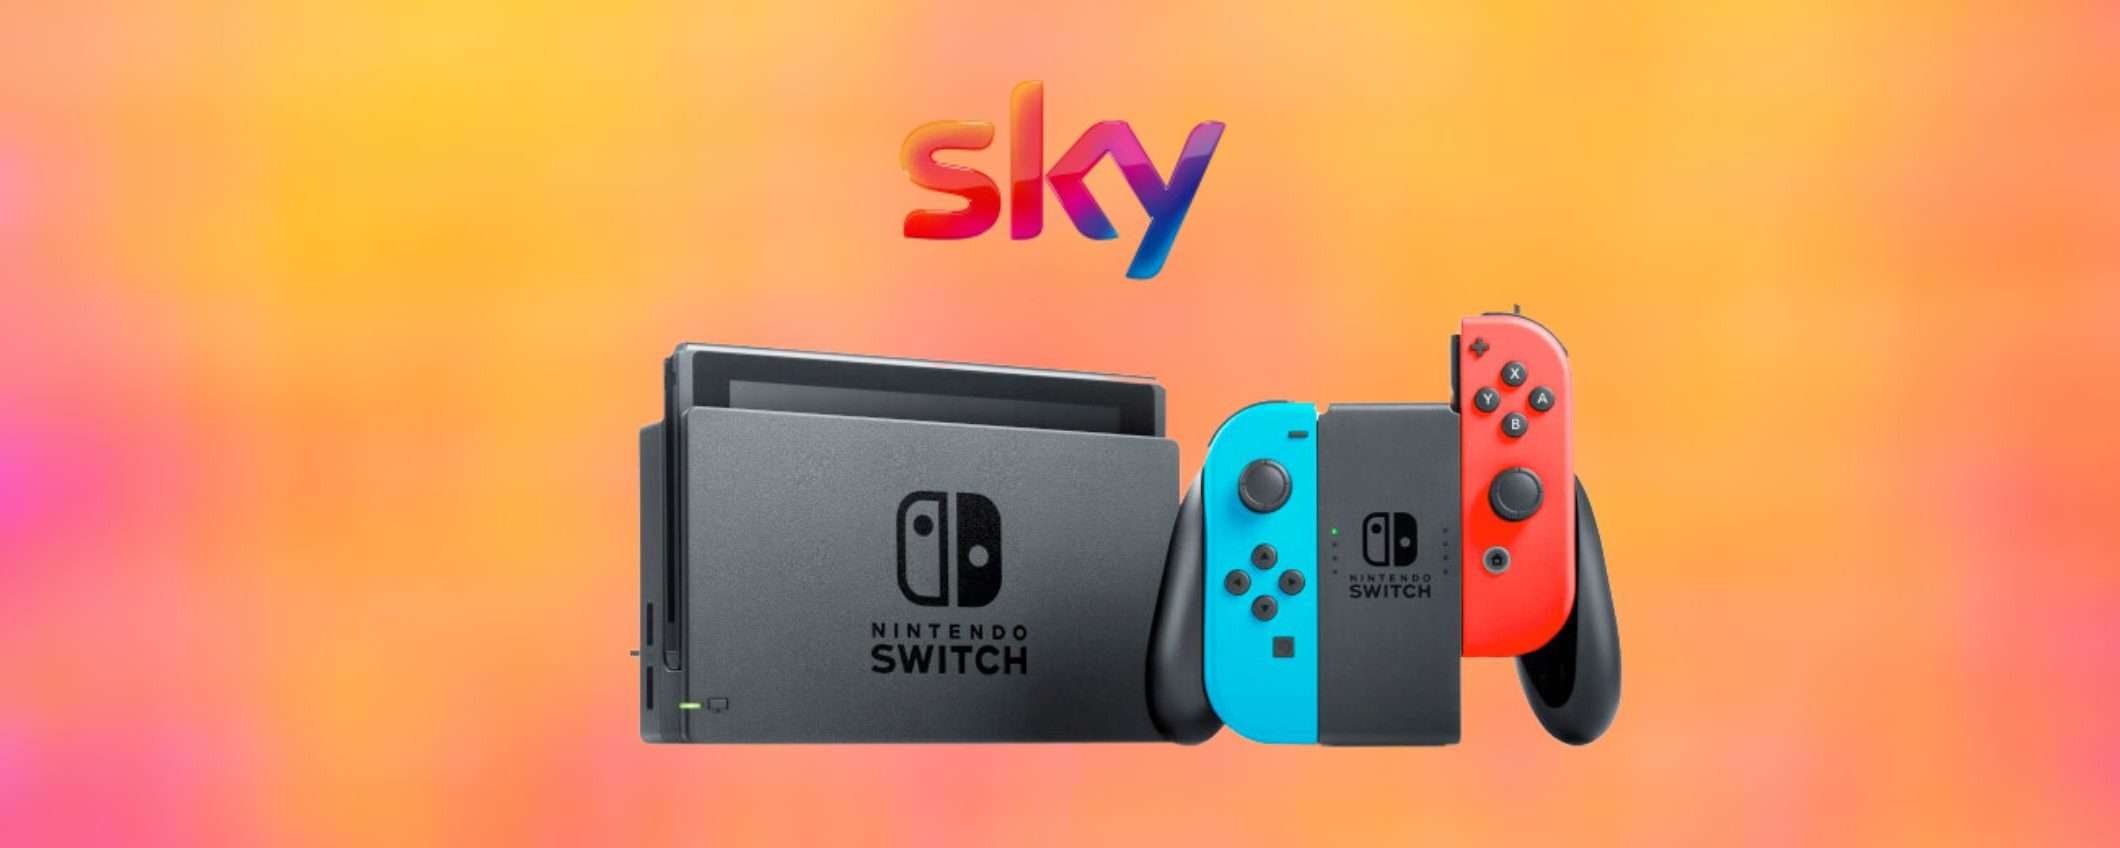 Sky ti regala una Nintendo Switch: l'incredibile nuova offerta